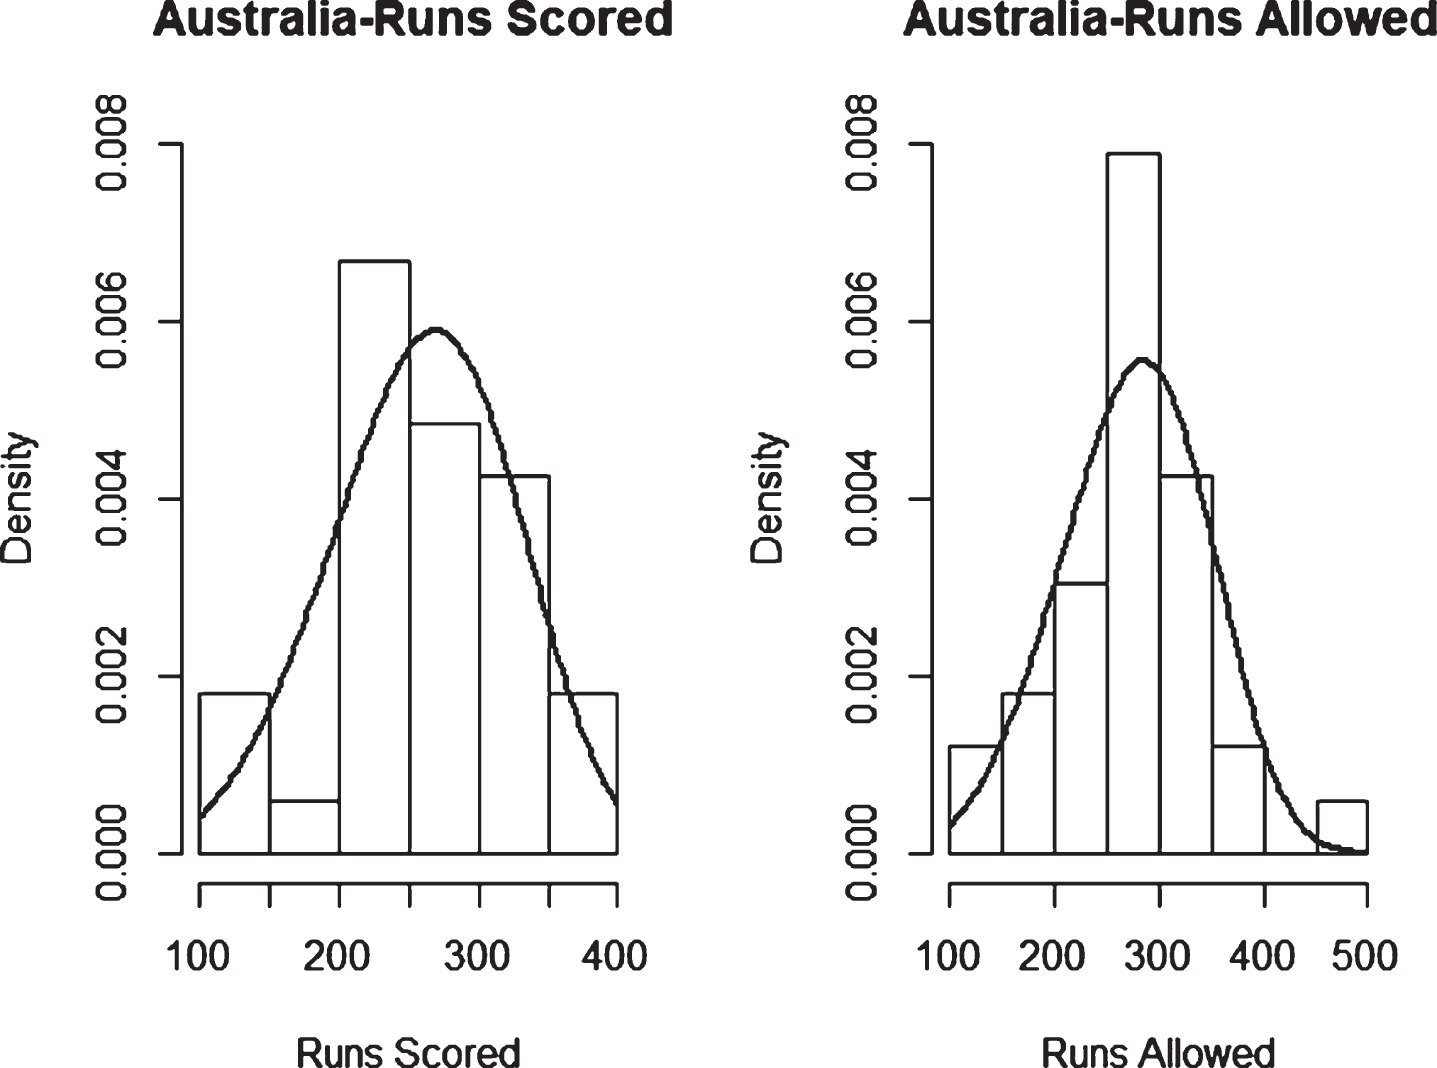 Weibull Distribution Fit for Runs Scored and Runs Allowed for Australia using Maximum Likelihood Method (ODI).